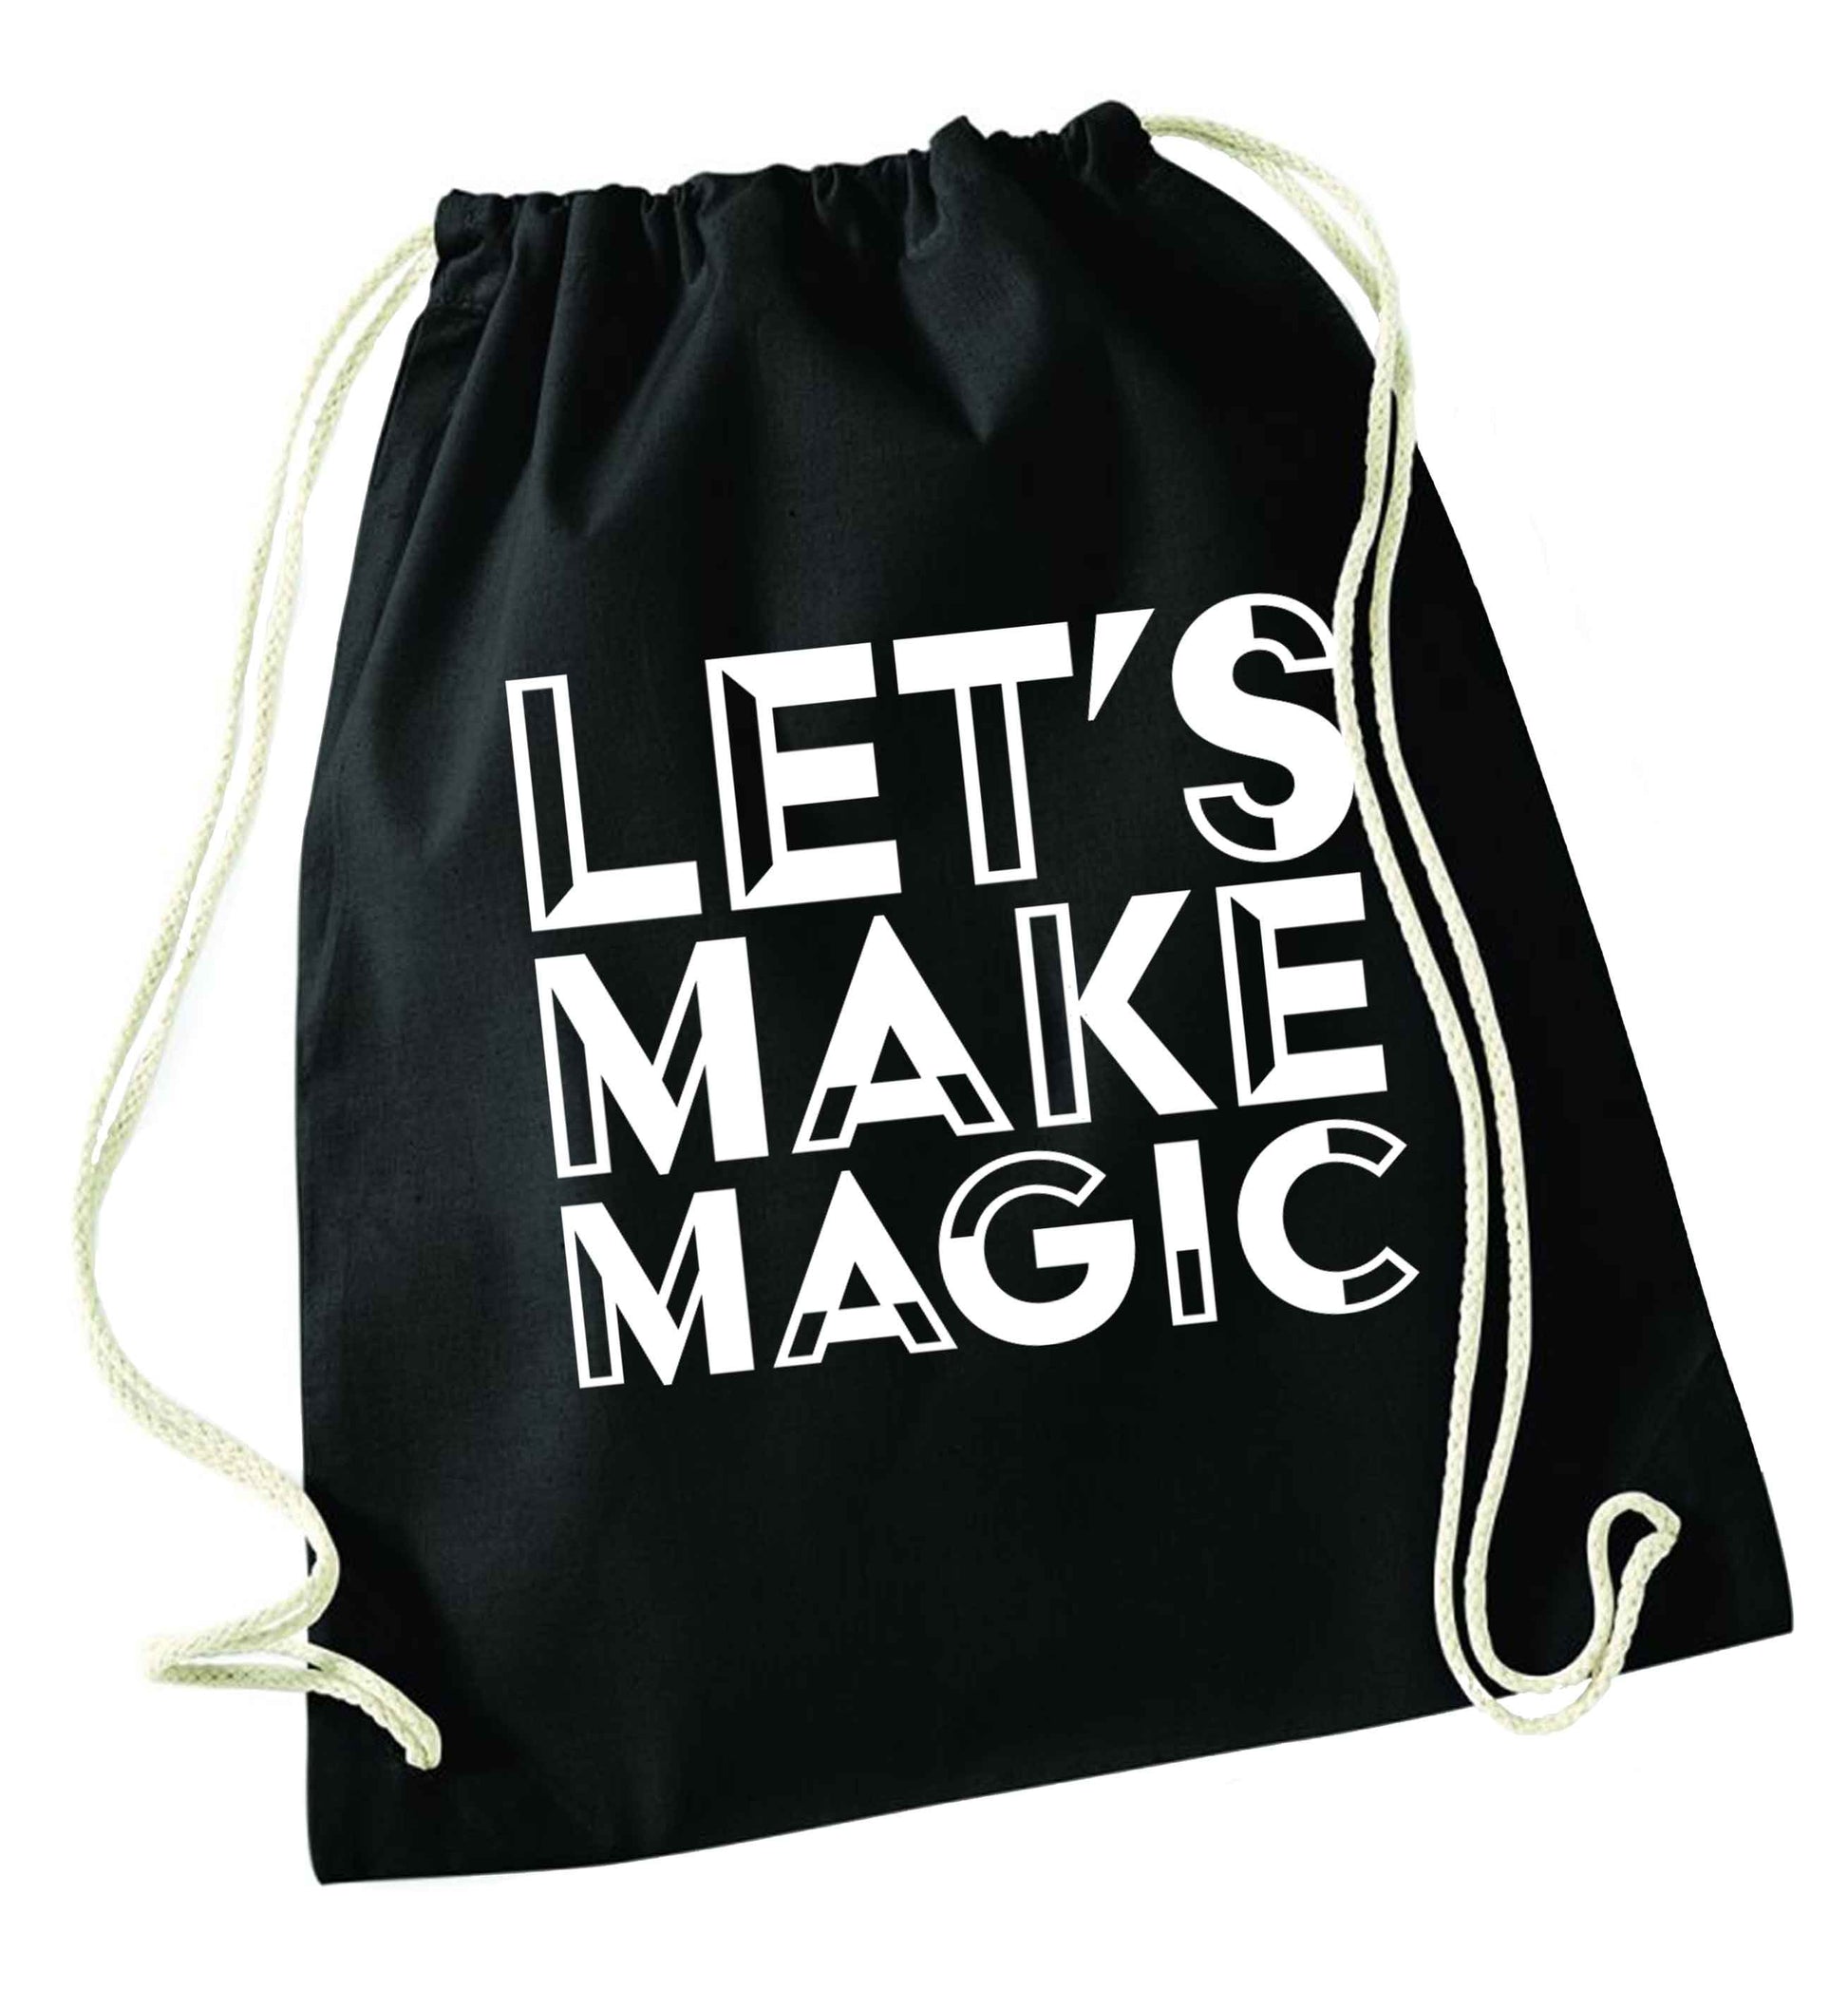 Let's make magic black drawstring bag